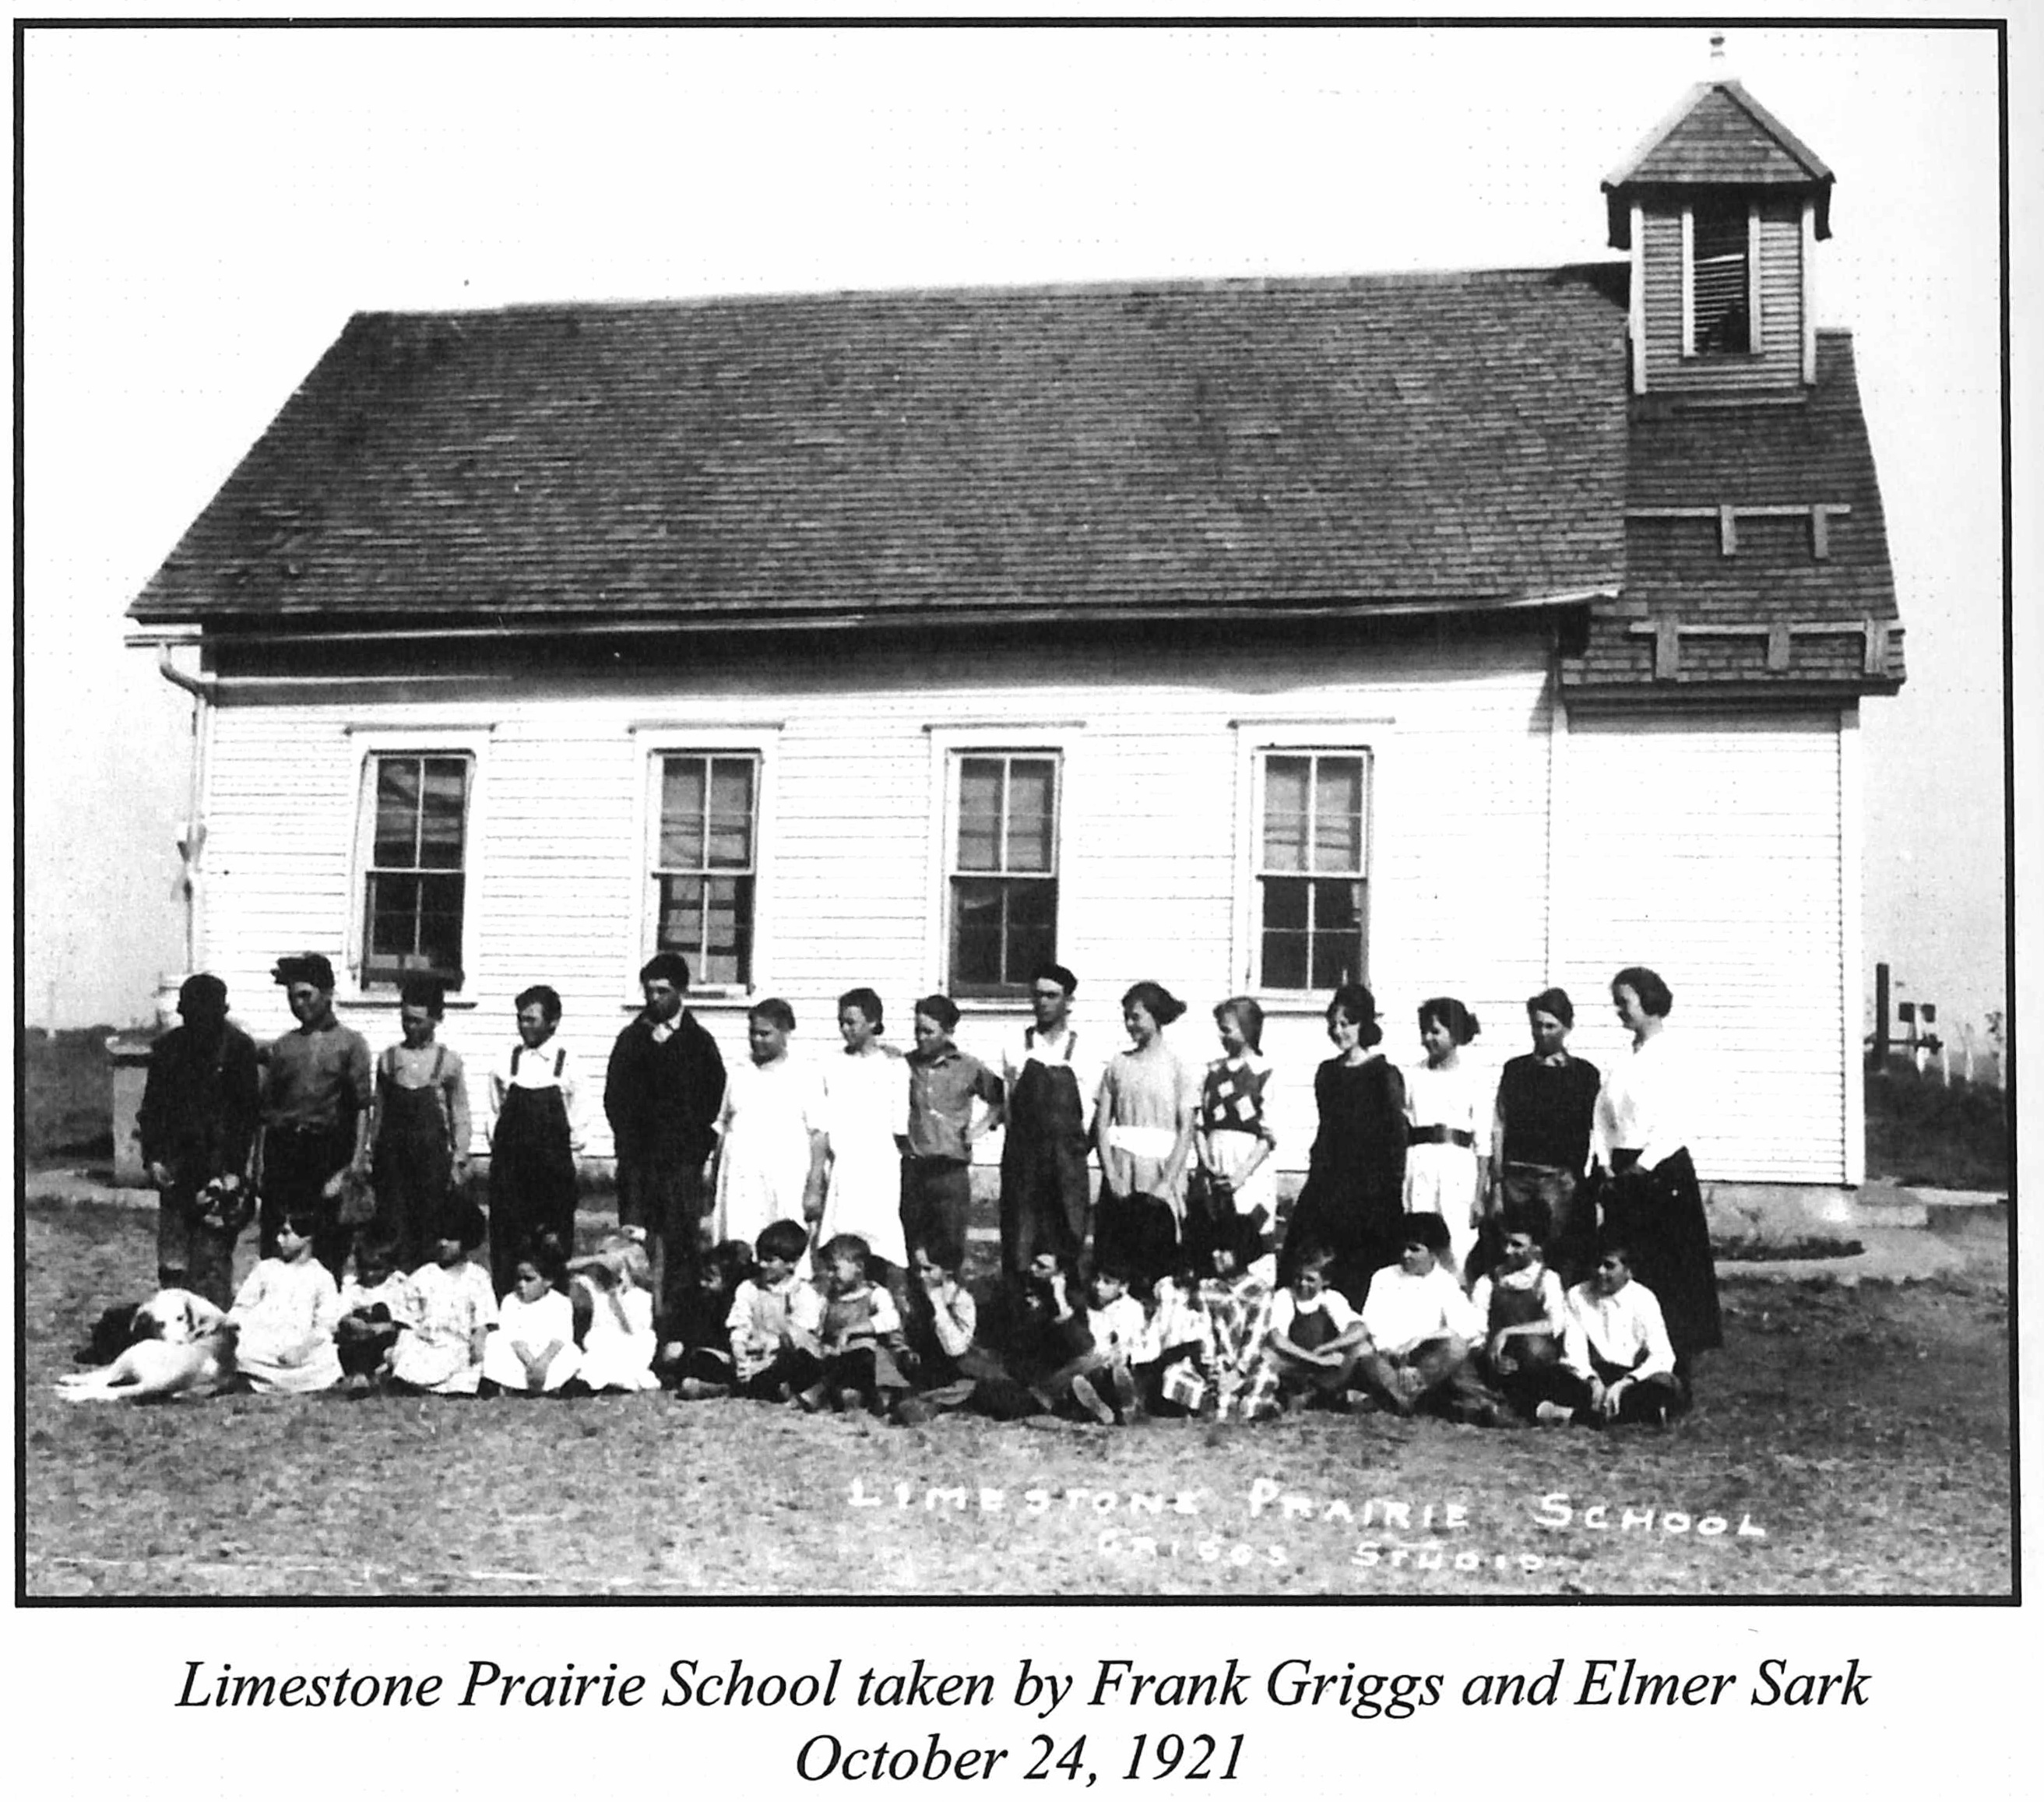 Limestone Prairie School in 1921